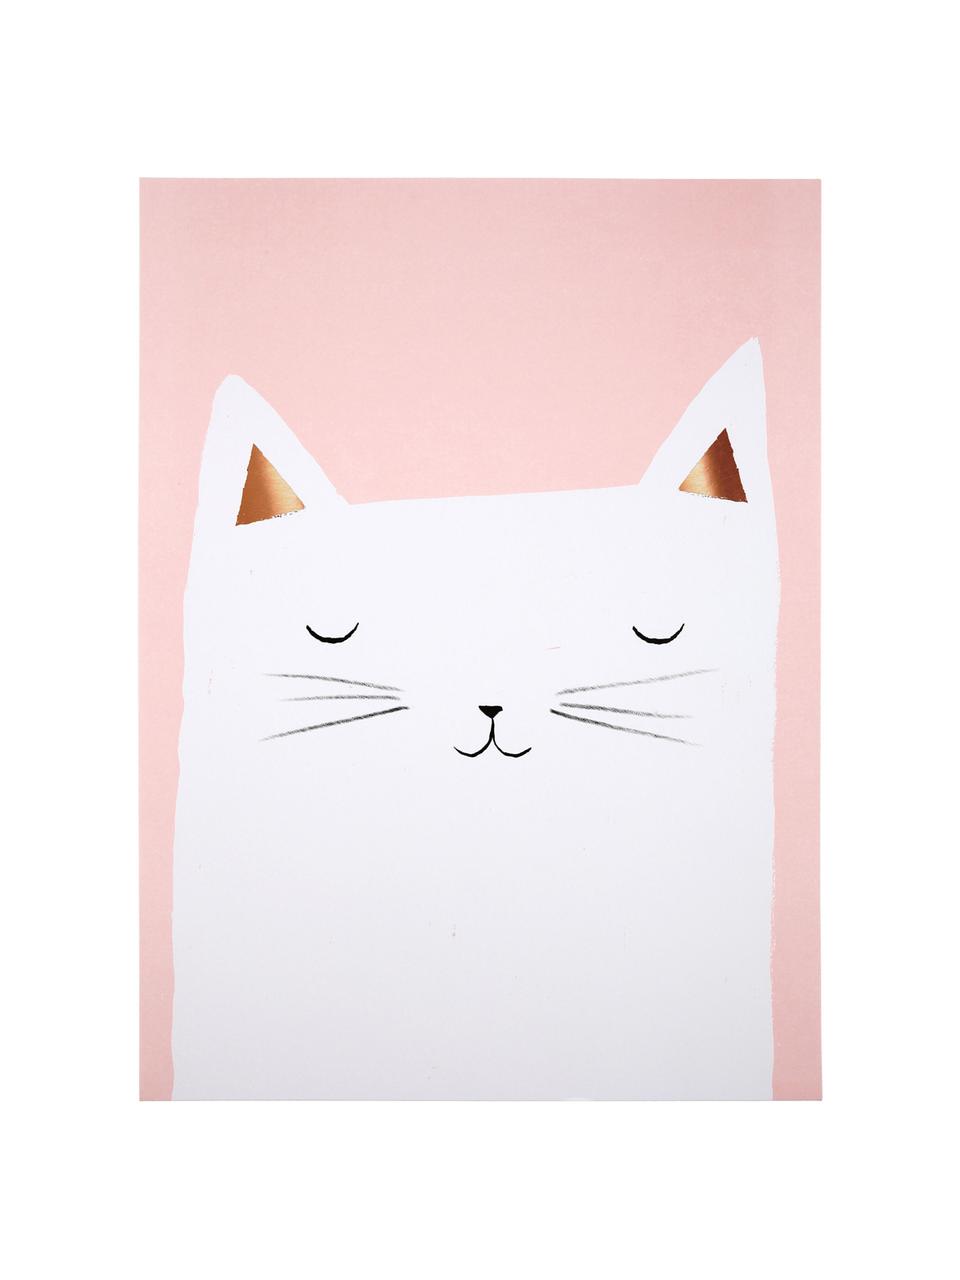 Postersset Cat & Dog, 2-delig, Digitale print op papier, 200 g/m², Roze, groen, wit, zwart, 31 x 41 cm